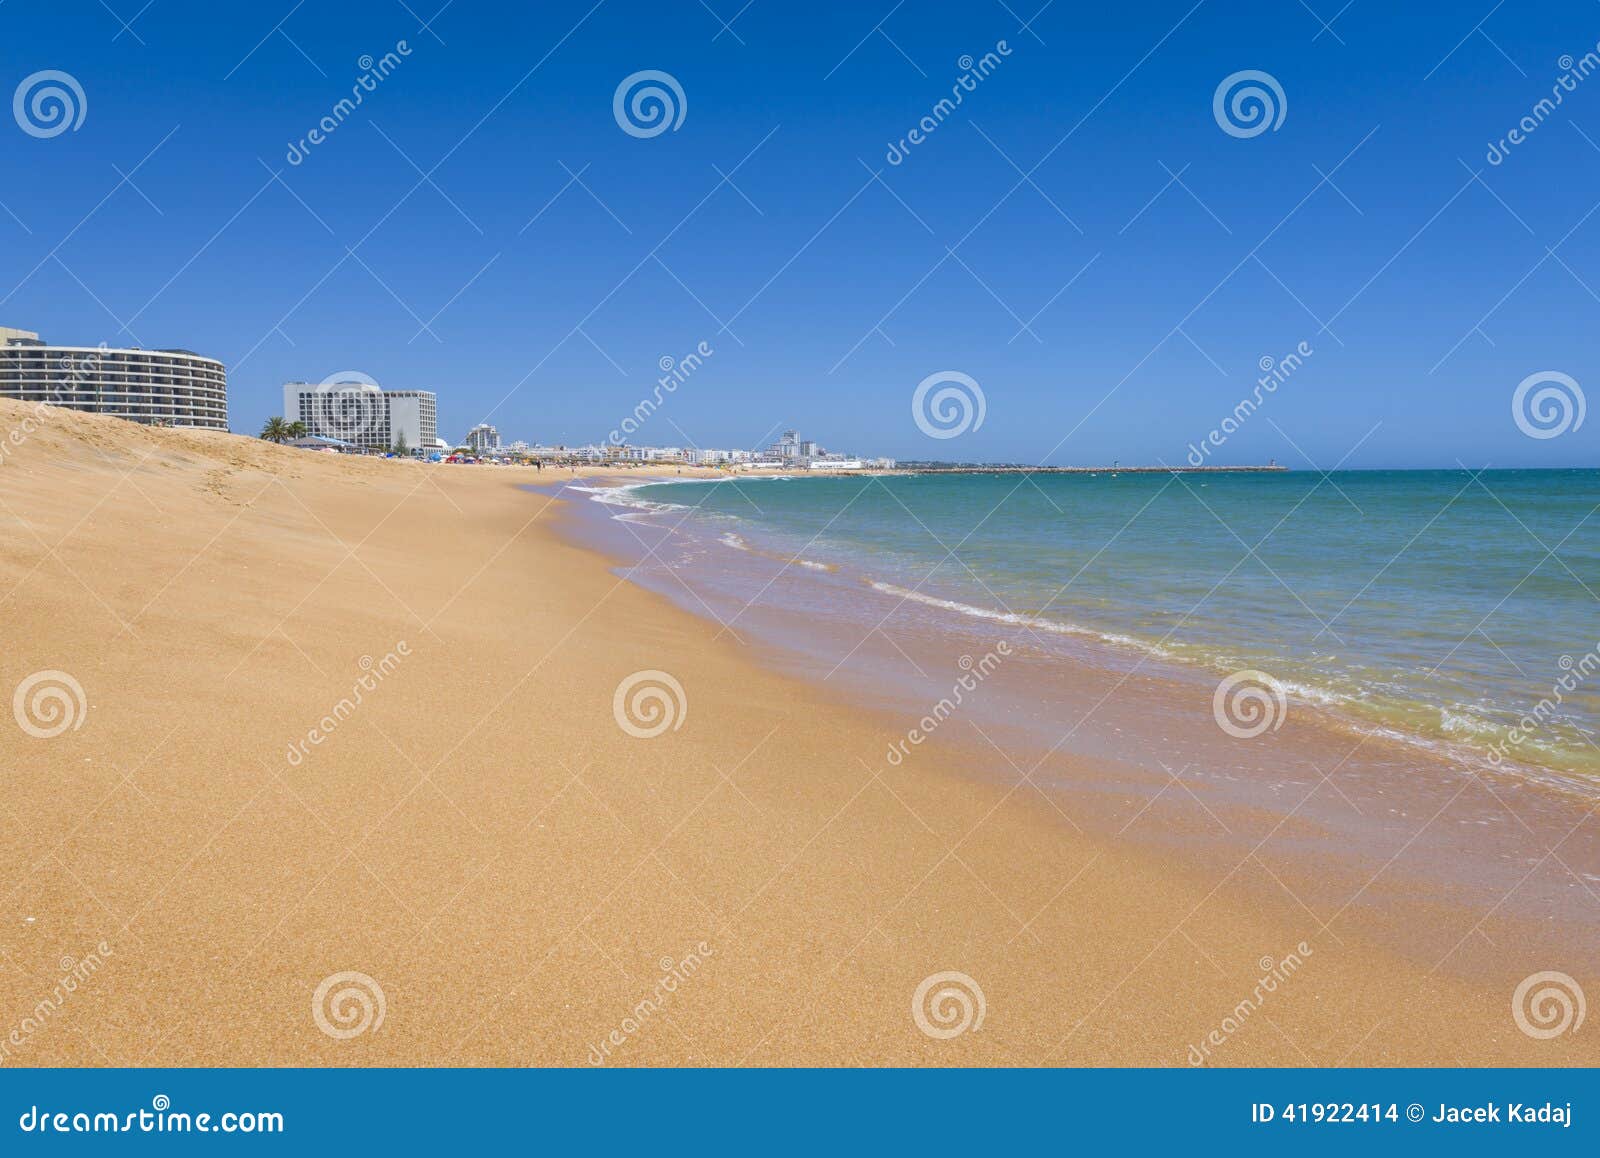 clean beach in vilamoura resort, portugal